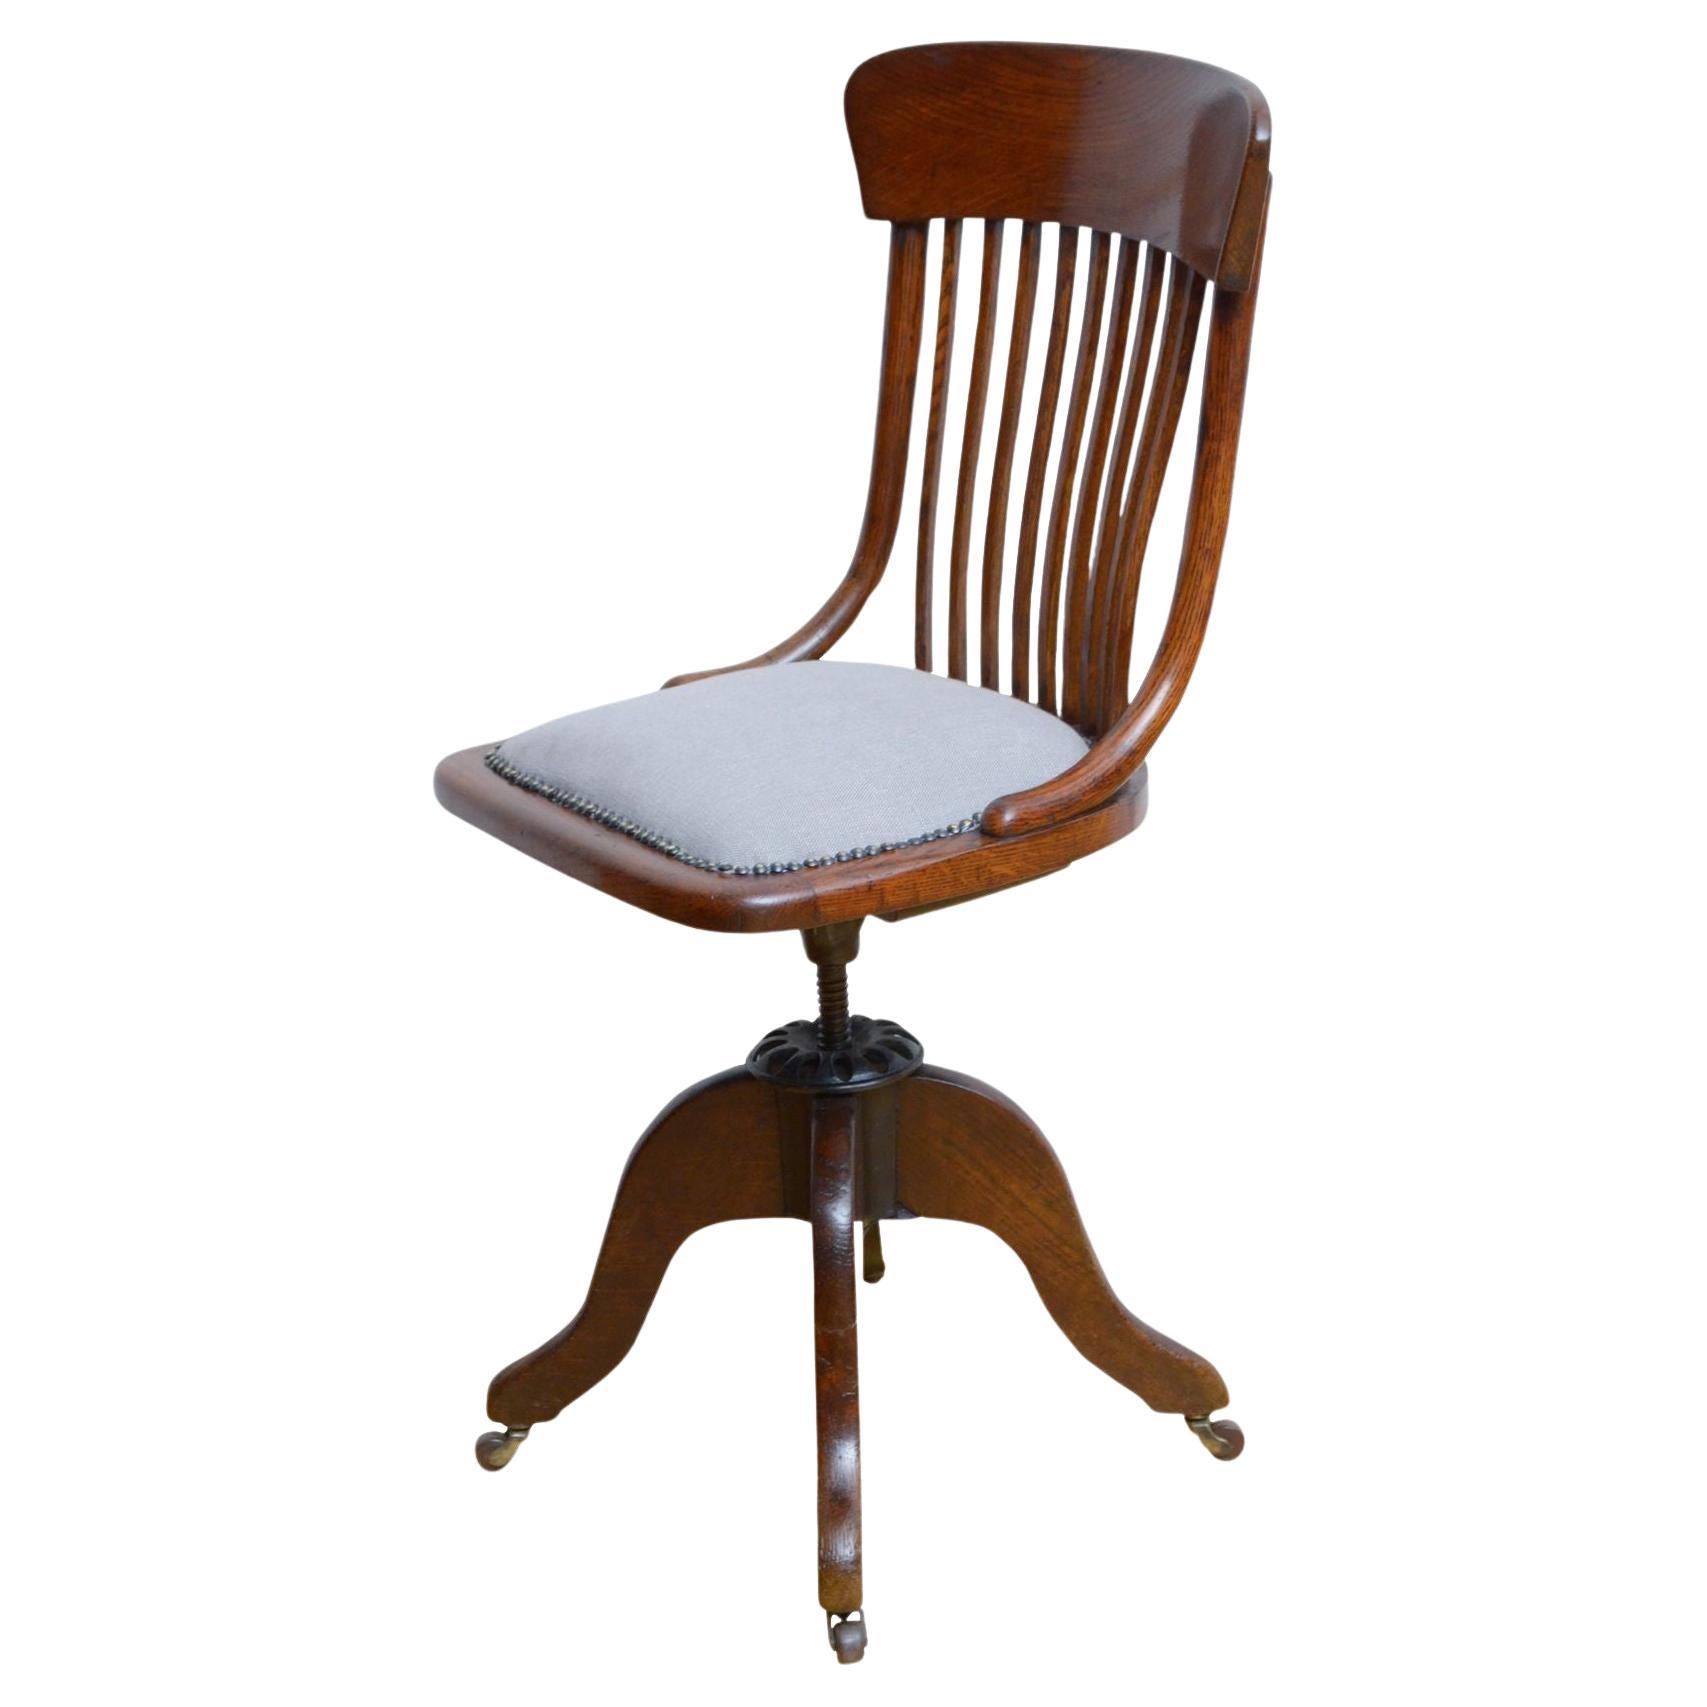 Early Xxth Century Solid Oak Office Chair Desk Chair